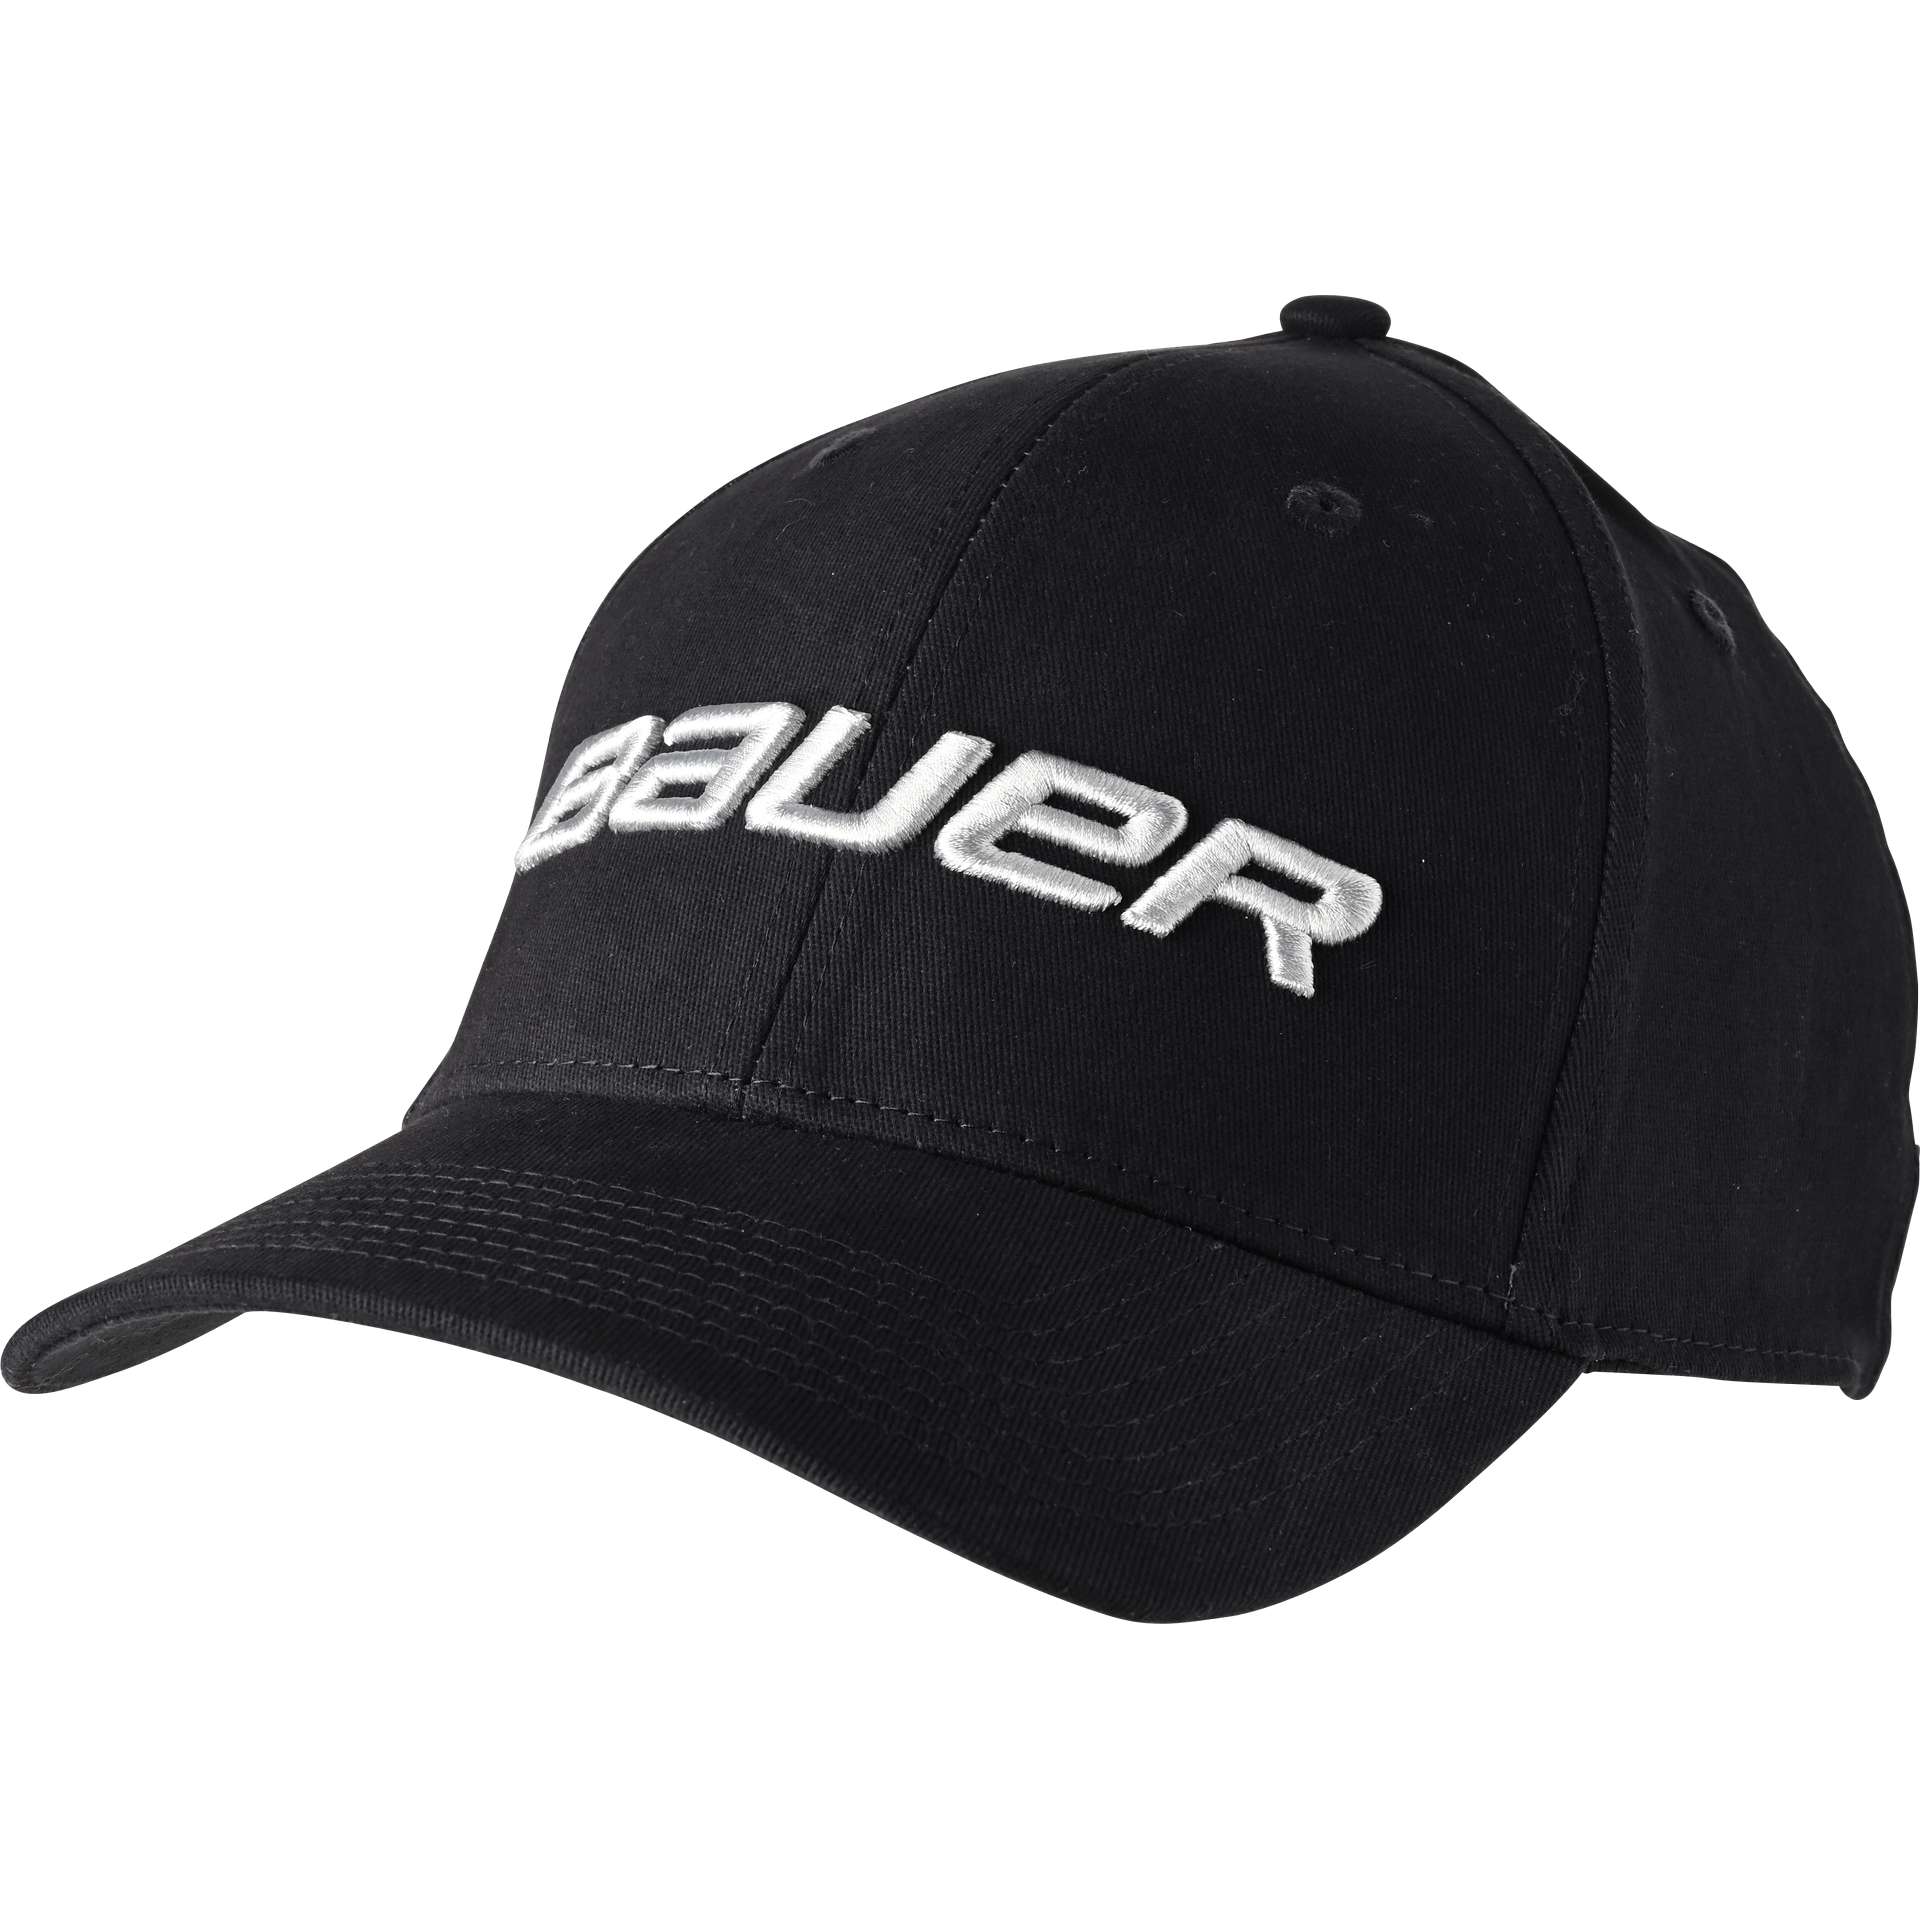 Bauer Core Fitted Cap Jr